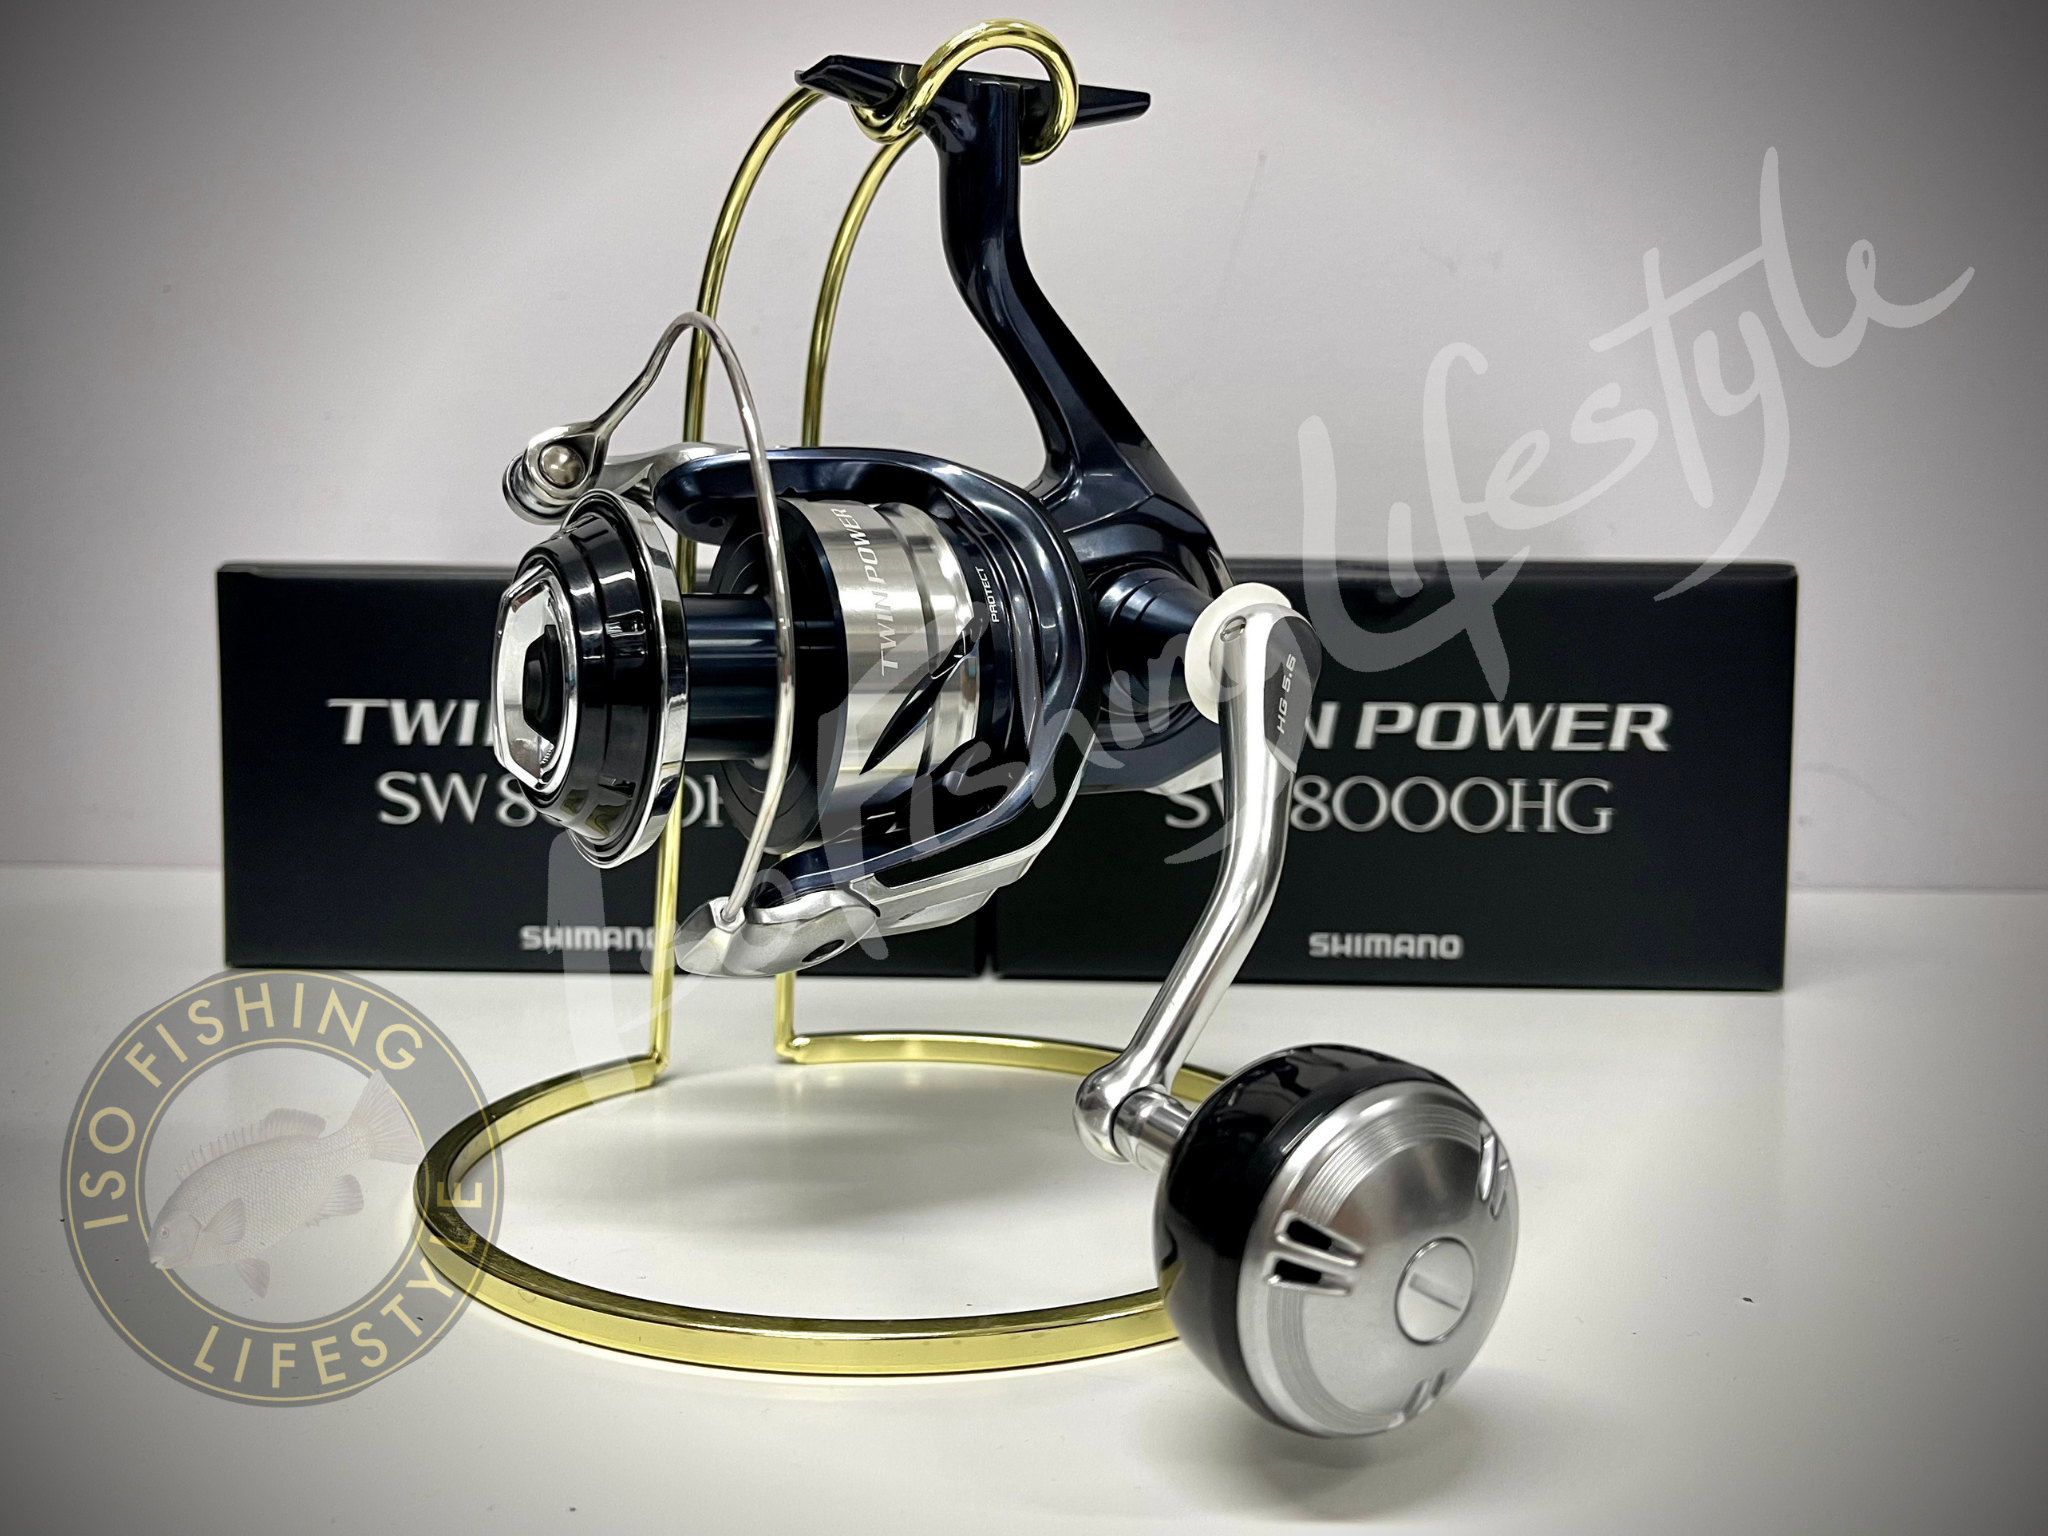 Shimano TWIN POWER SW 14000XG Spinning Reel